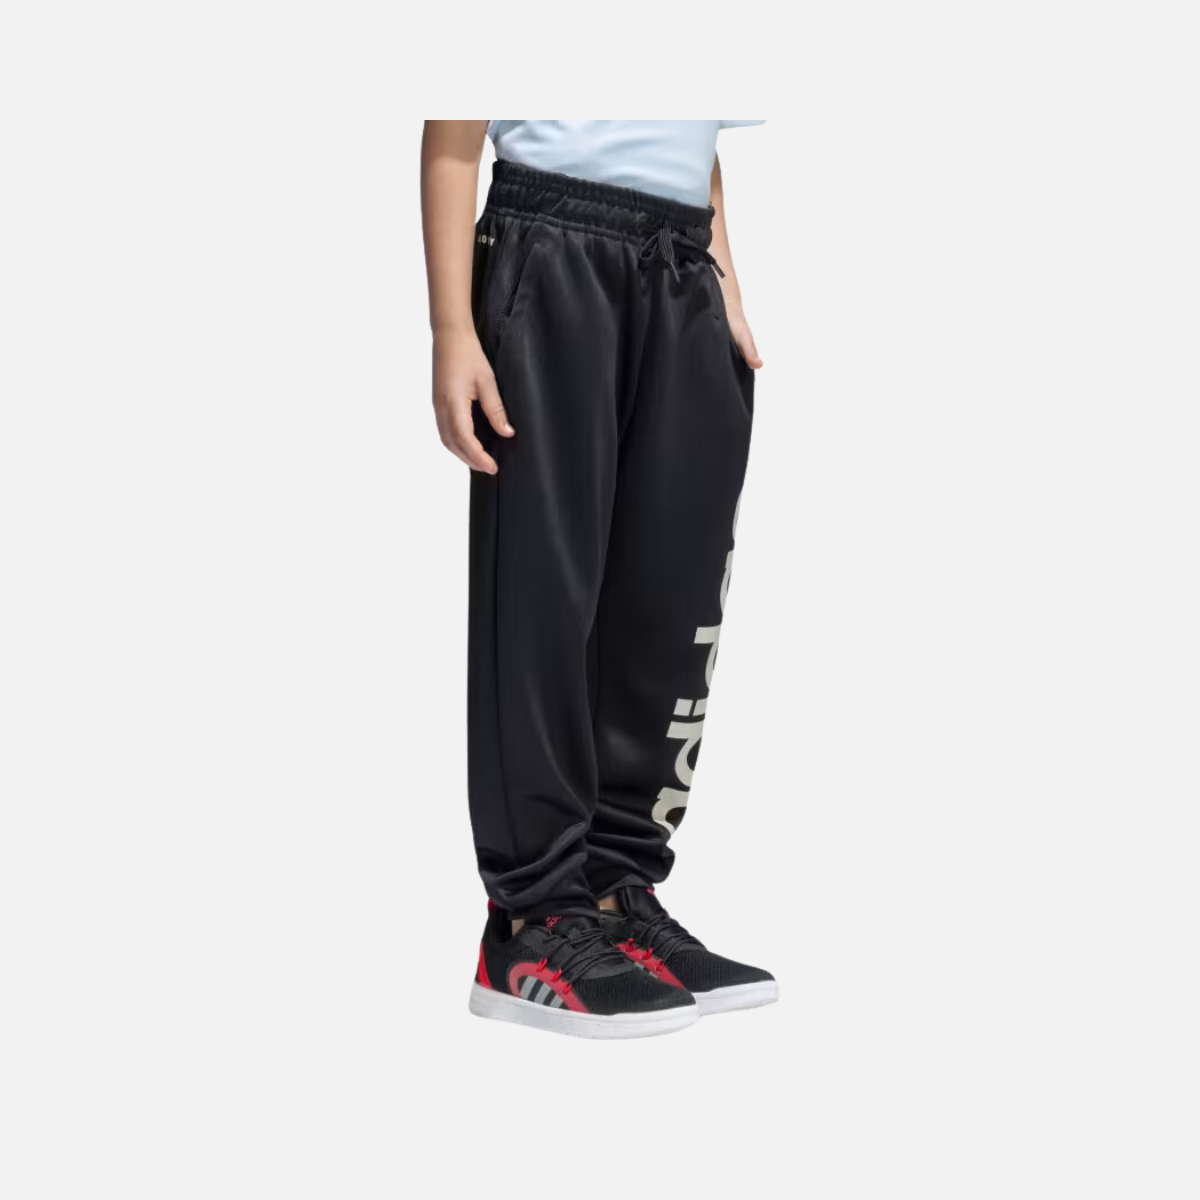 Adidas Graphic Kids Boy Pant (7-16 Years) -Black